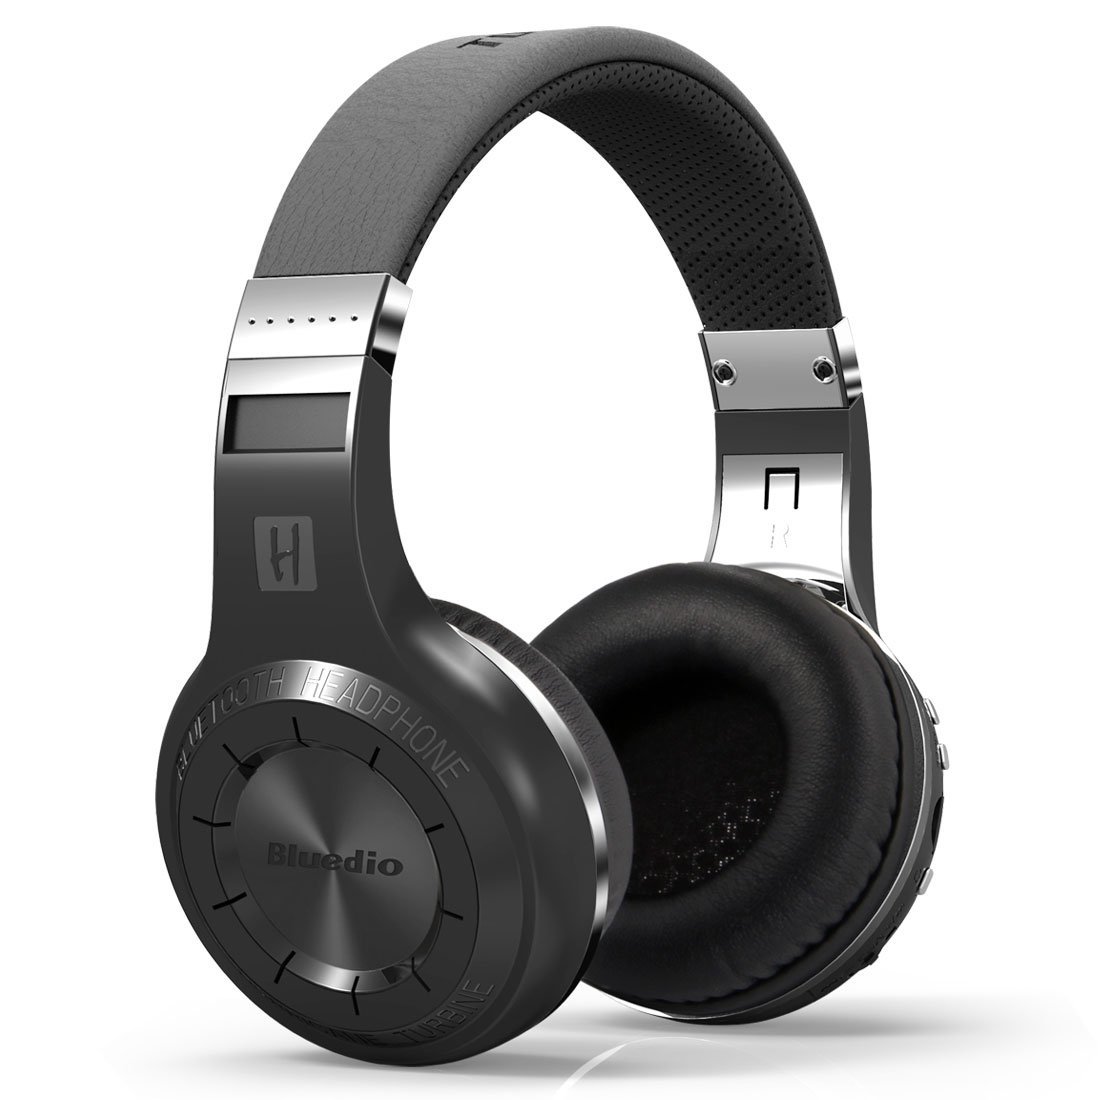 Bluedio H+ Bluetooth 4.1 Stereo Wireless Headphones Hifi